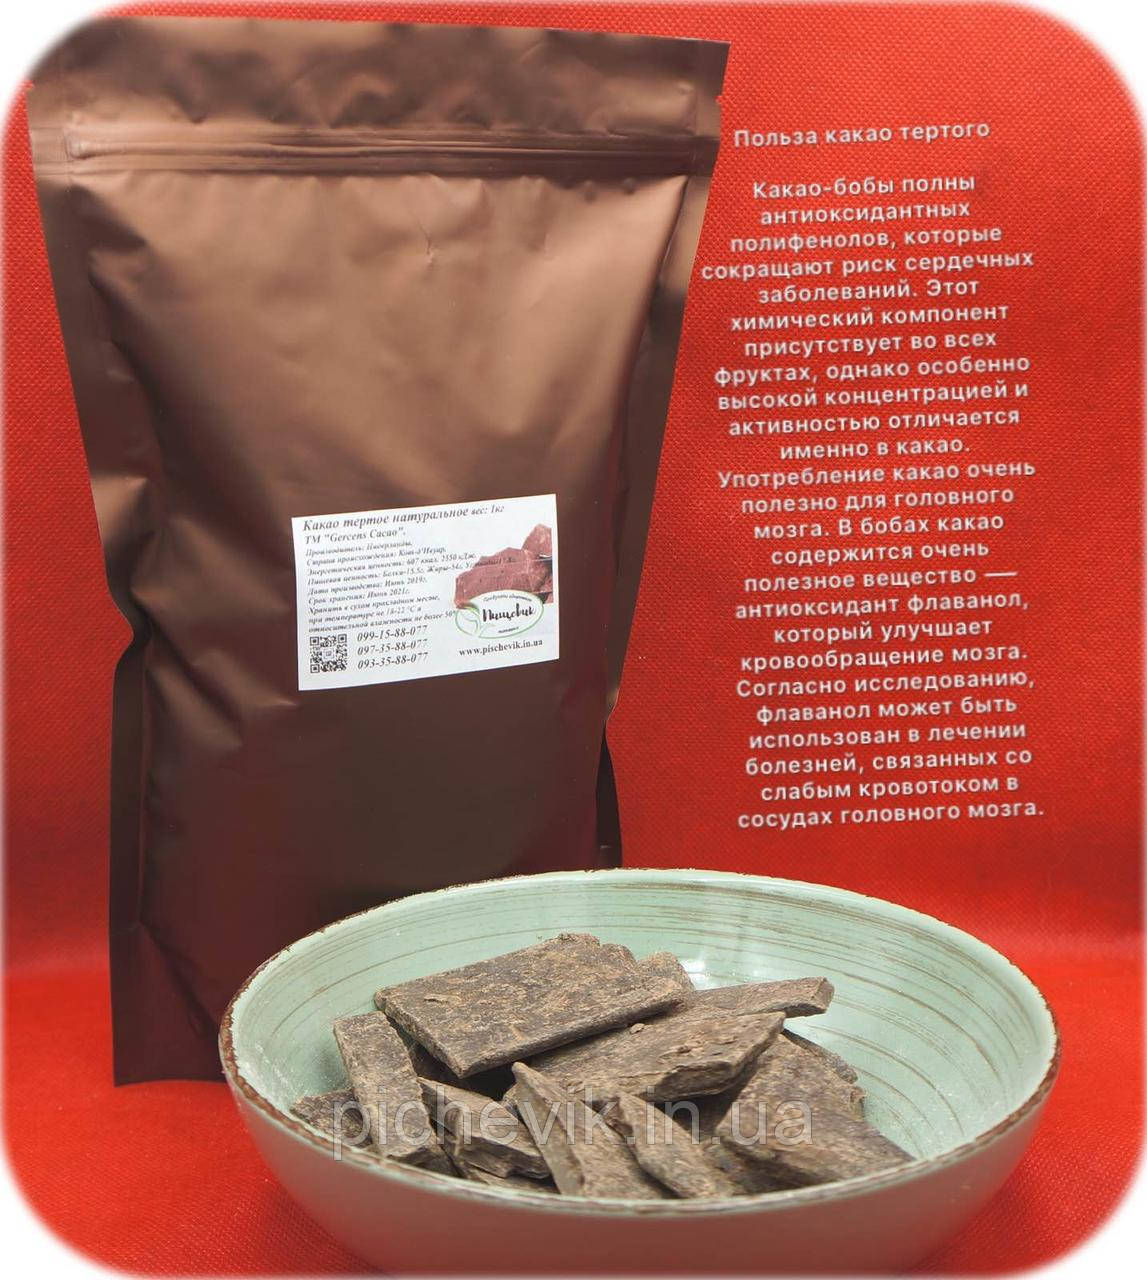 Какао терте (моноліт) ТМ Gerkens Cacao вага:500грамм.